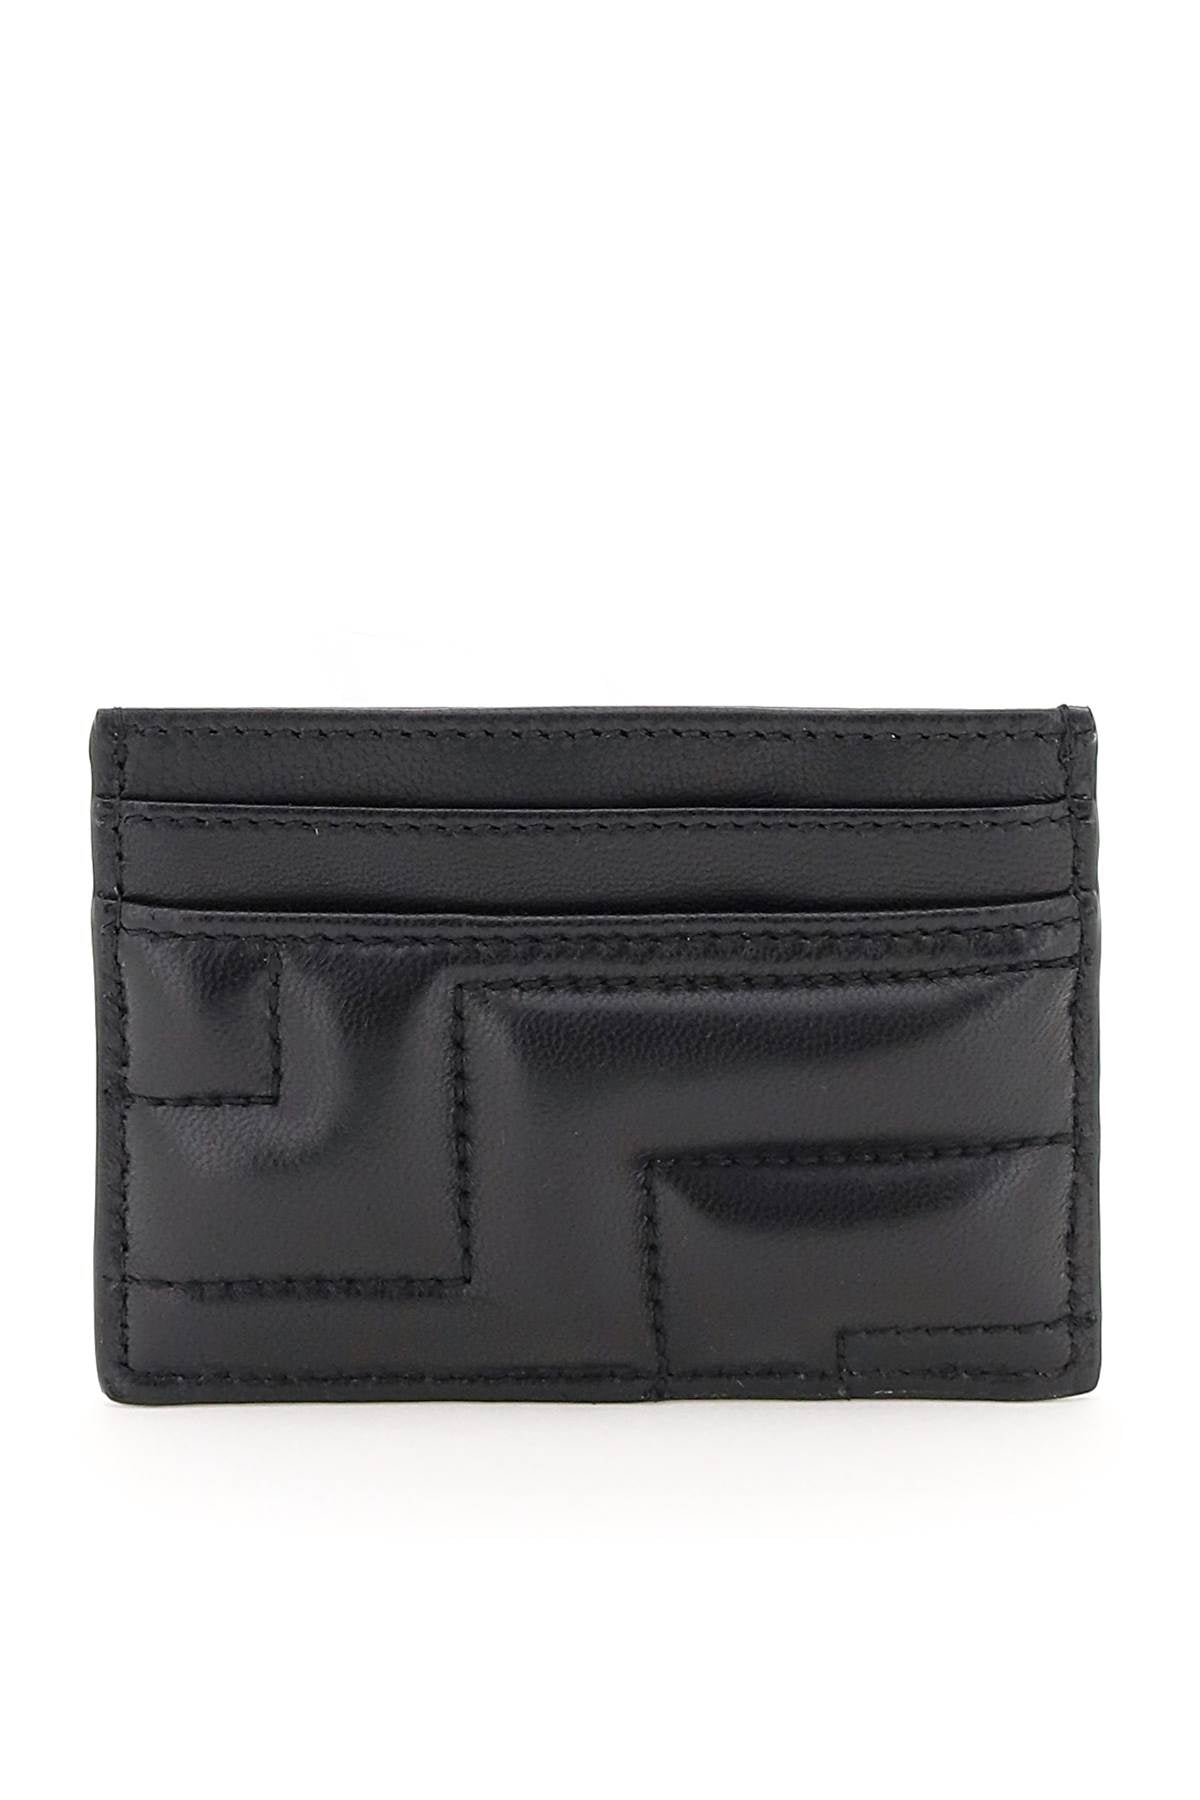 Quilted Nappa Leather Card Holder for Men - Black Color | LOZURI